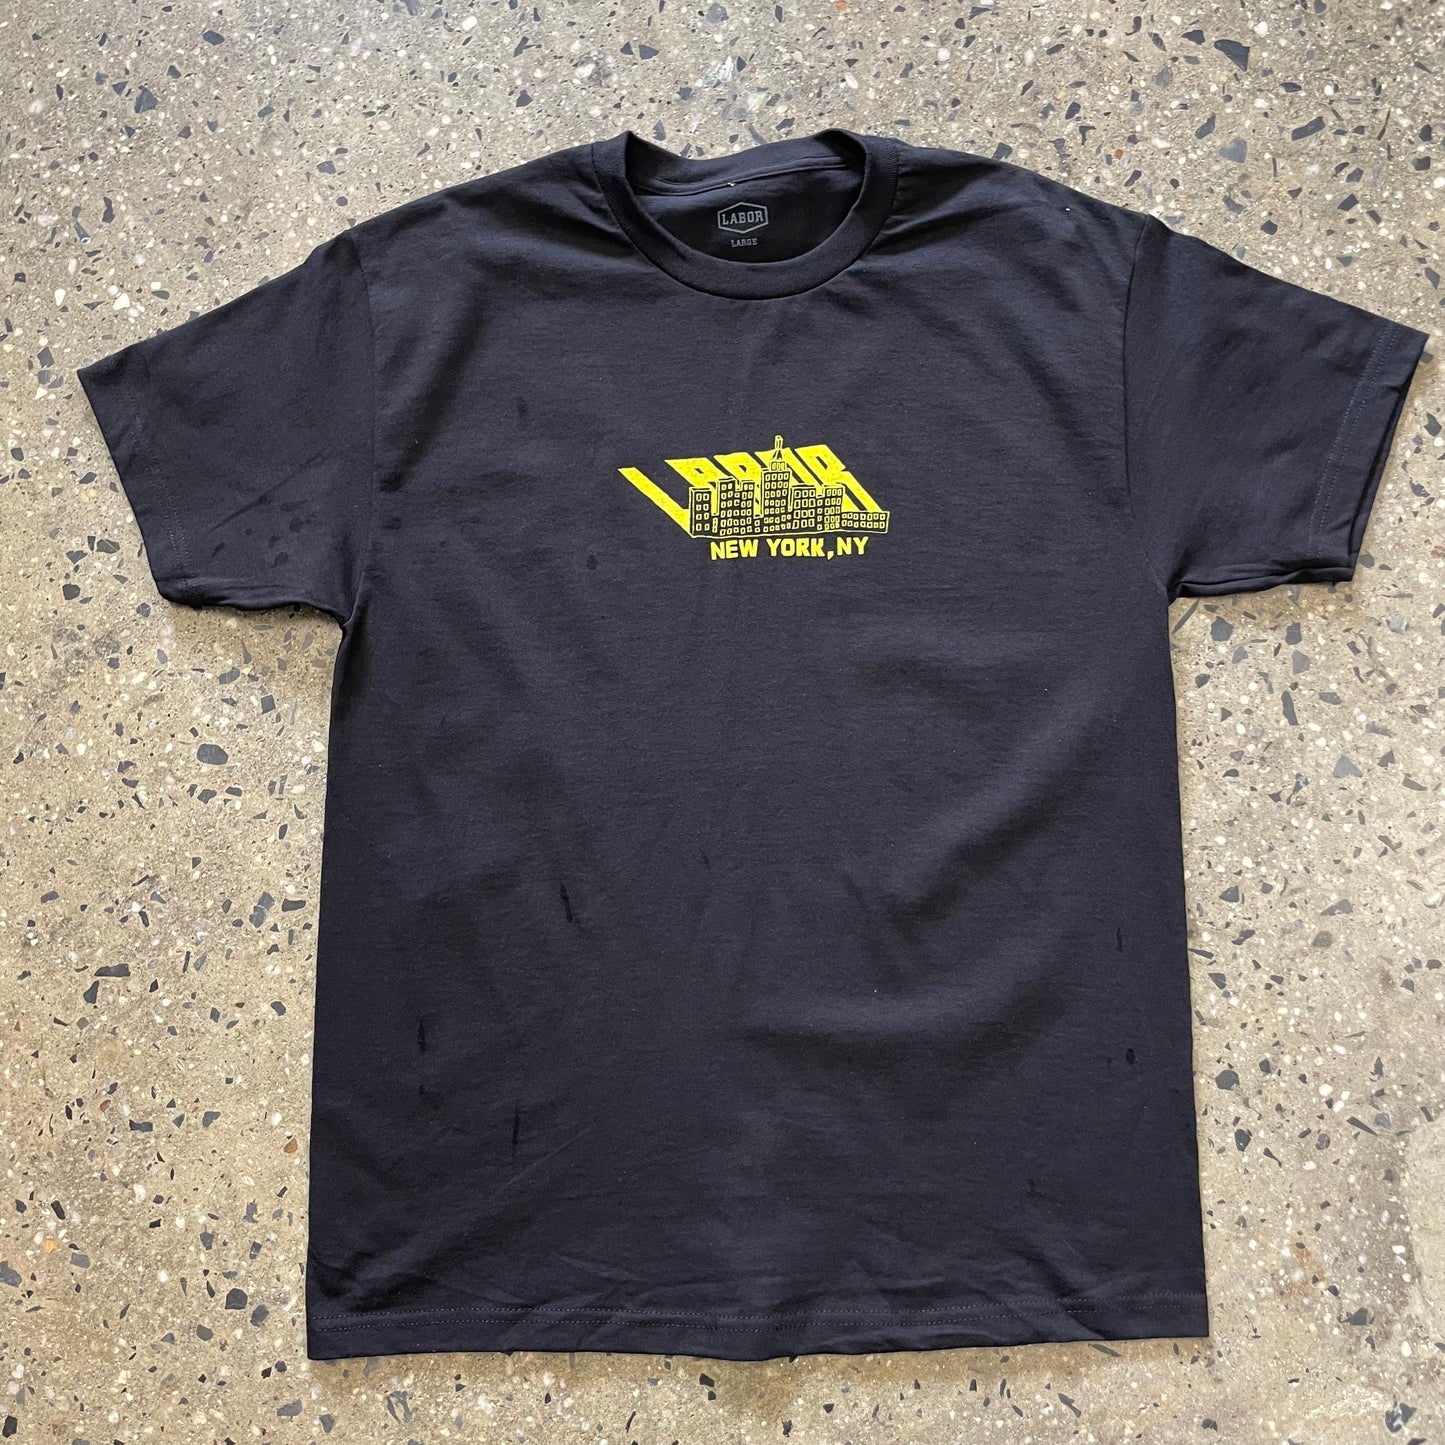 Labor Shadow T-Shirt - Black/Yellow